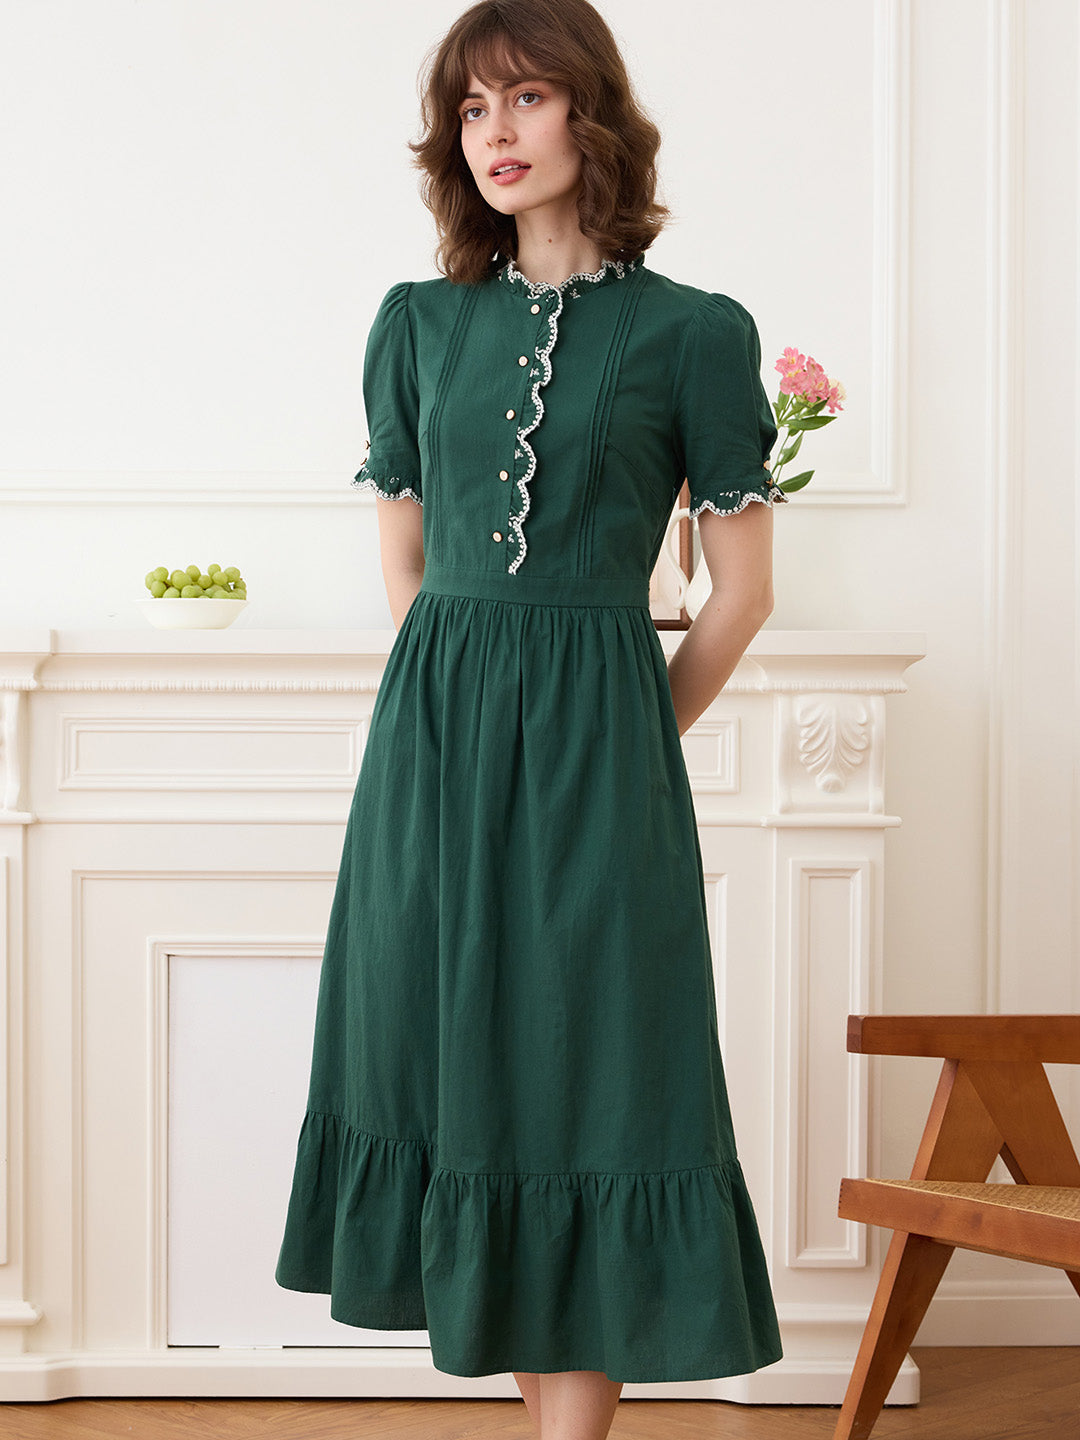 Romina 復古刺繡花邊綠色連衣裙